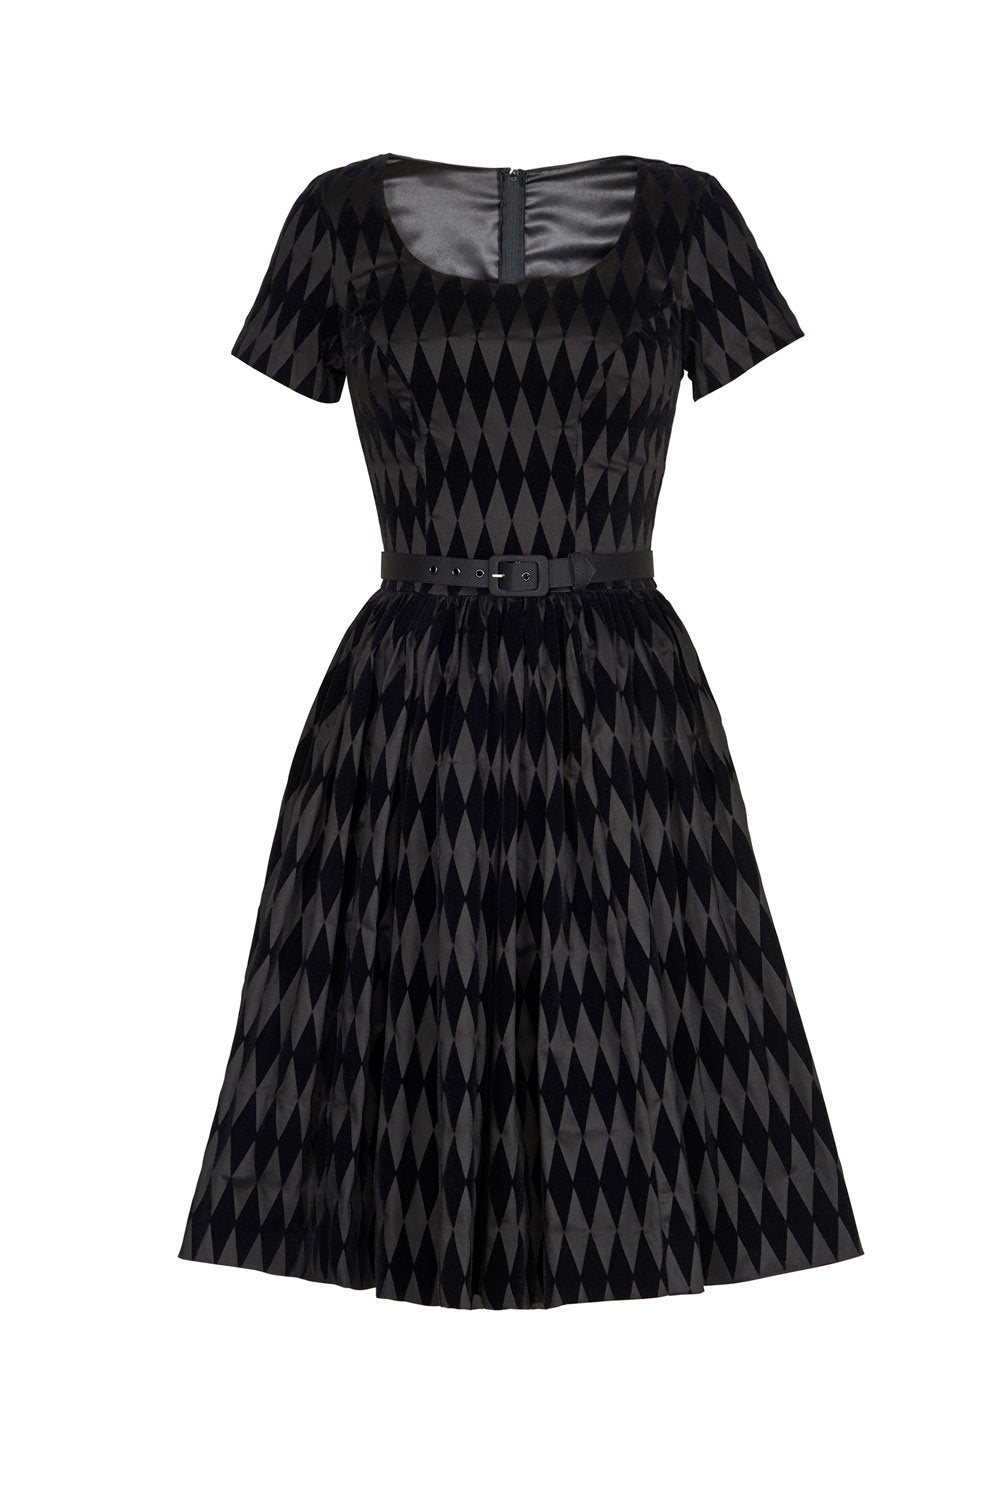 Pinup Couture Gena Dress in Black Flocked Harlequin